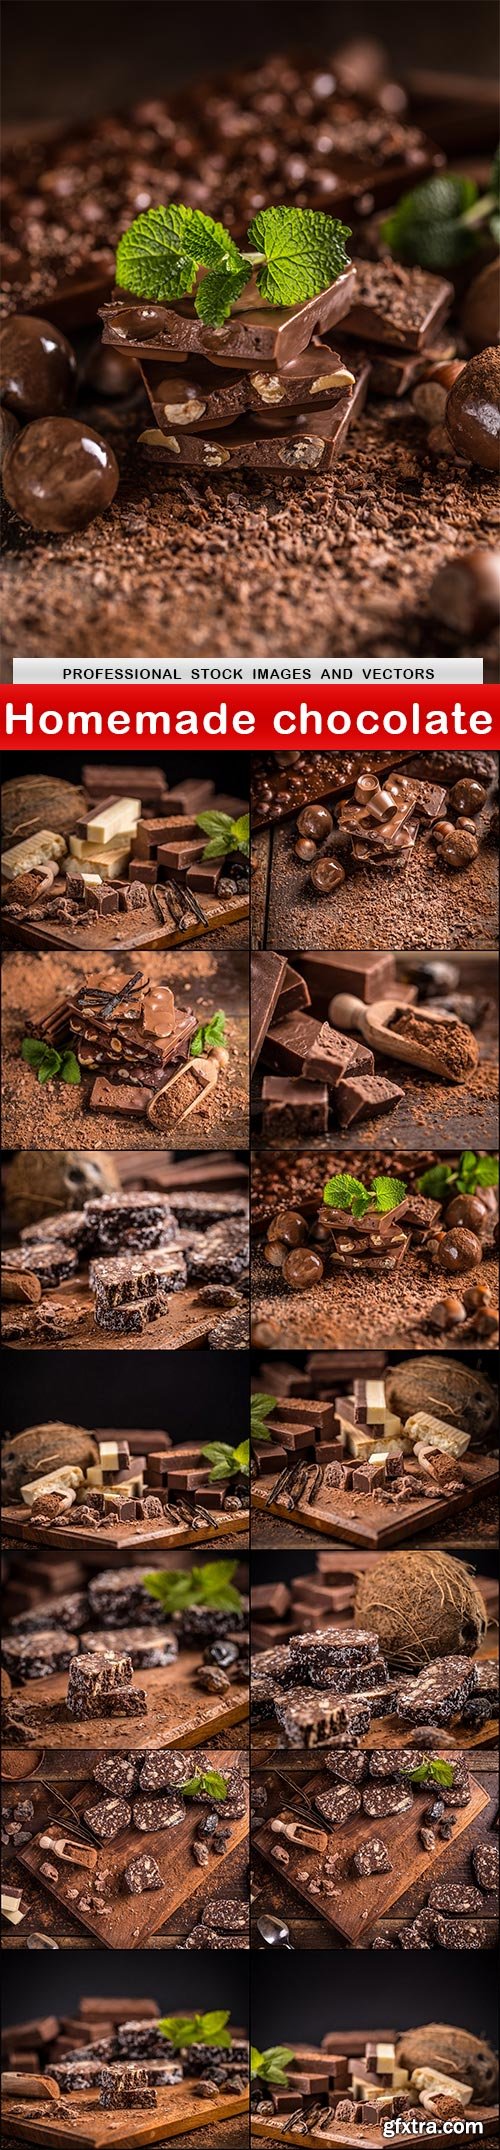 Homemade chocolate - 15 UHQ JPEG